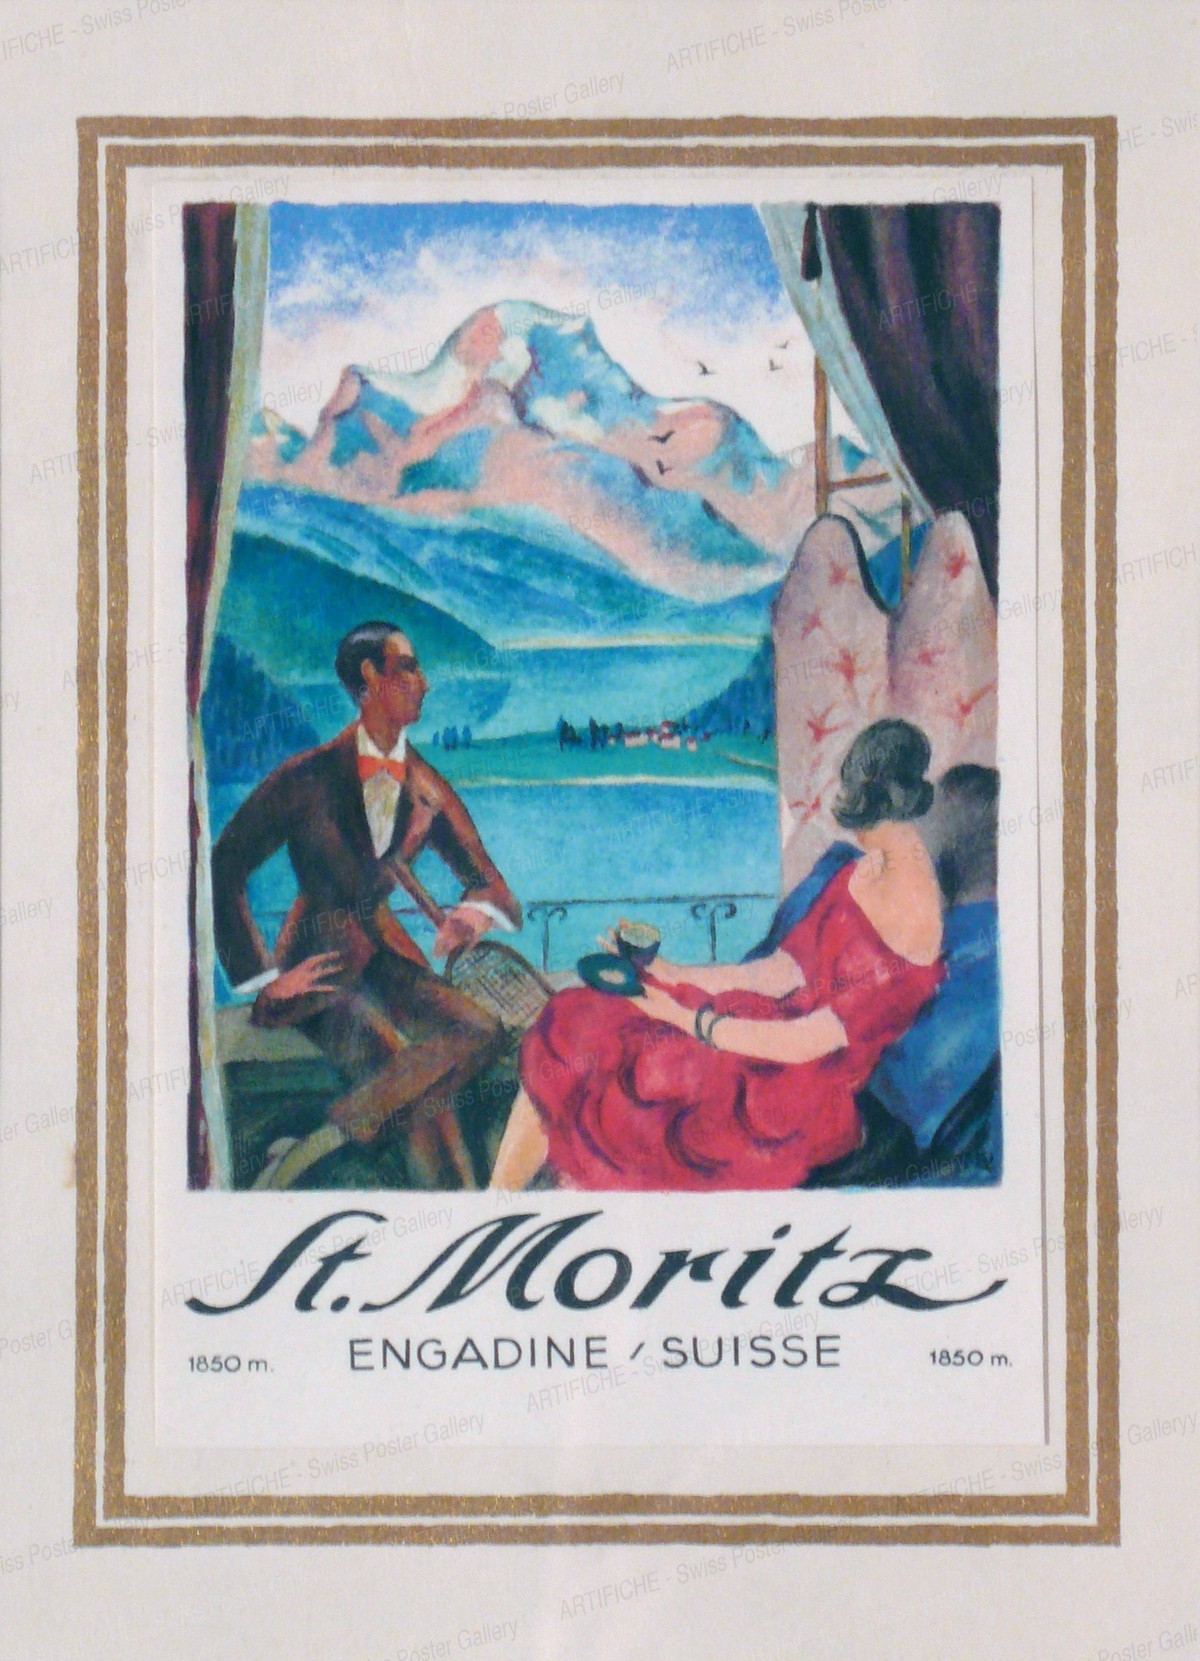 St. Moritz – Engadine / Suisse, Edouard Stiefel